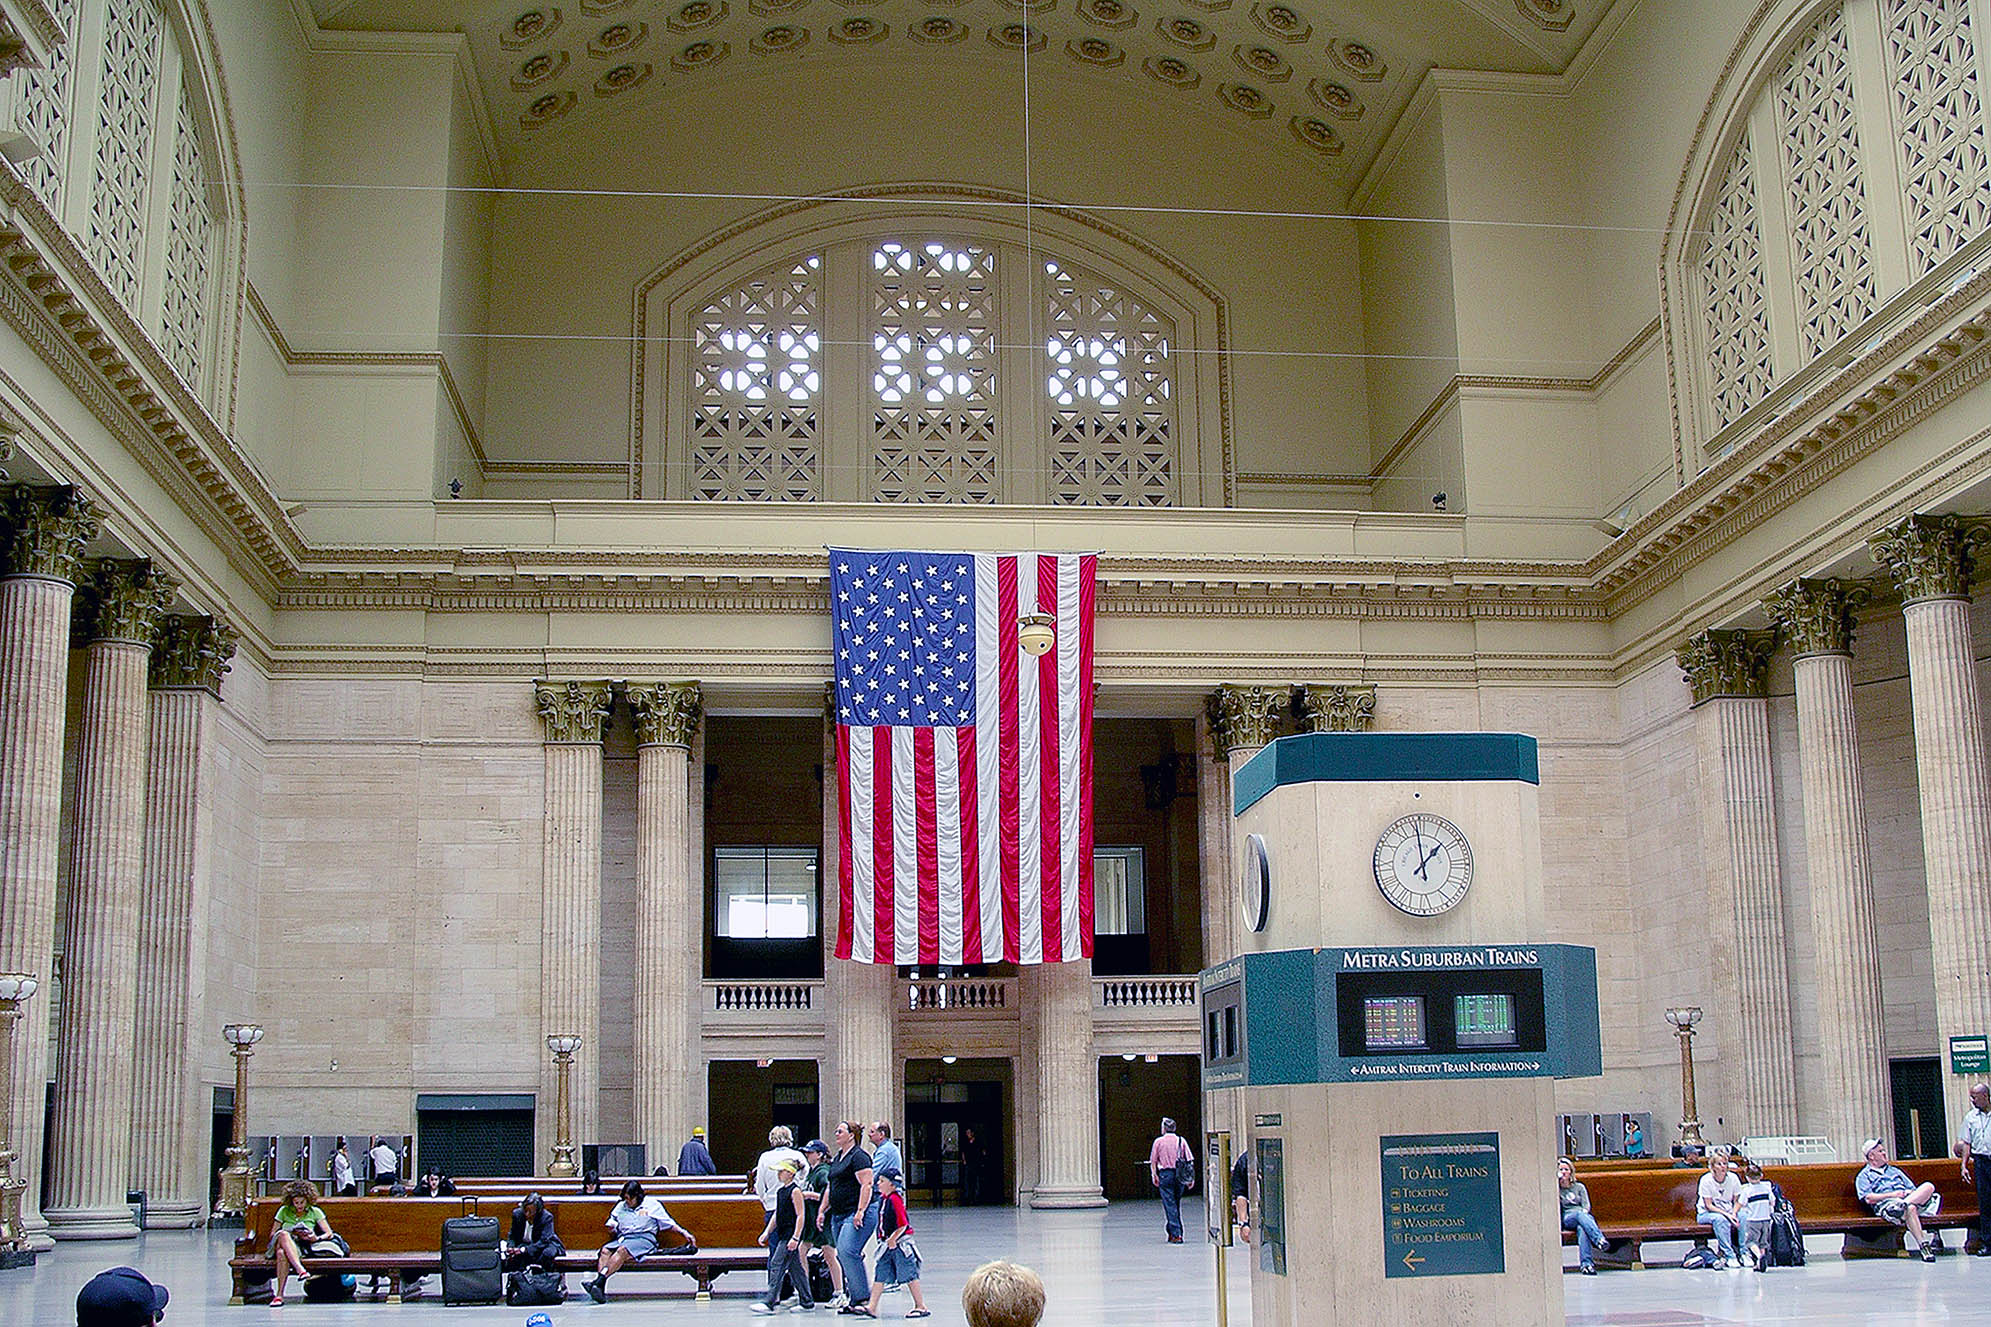 Union Station i Chicago.